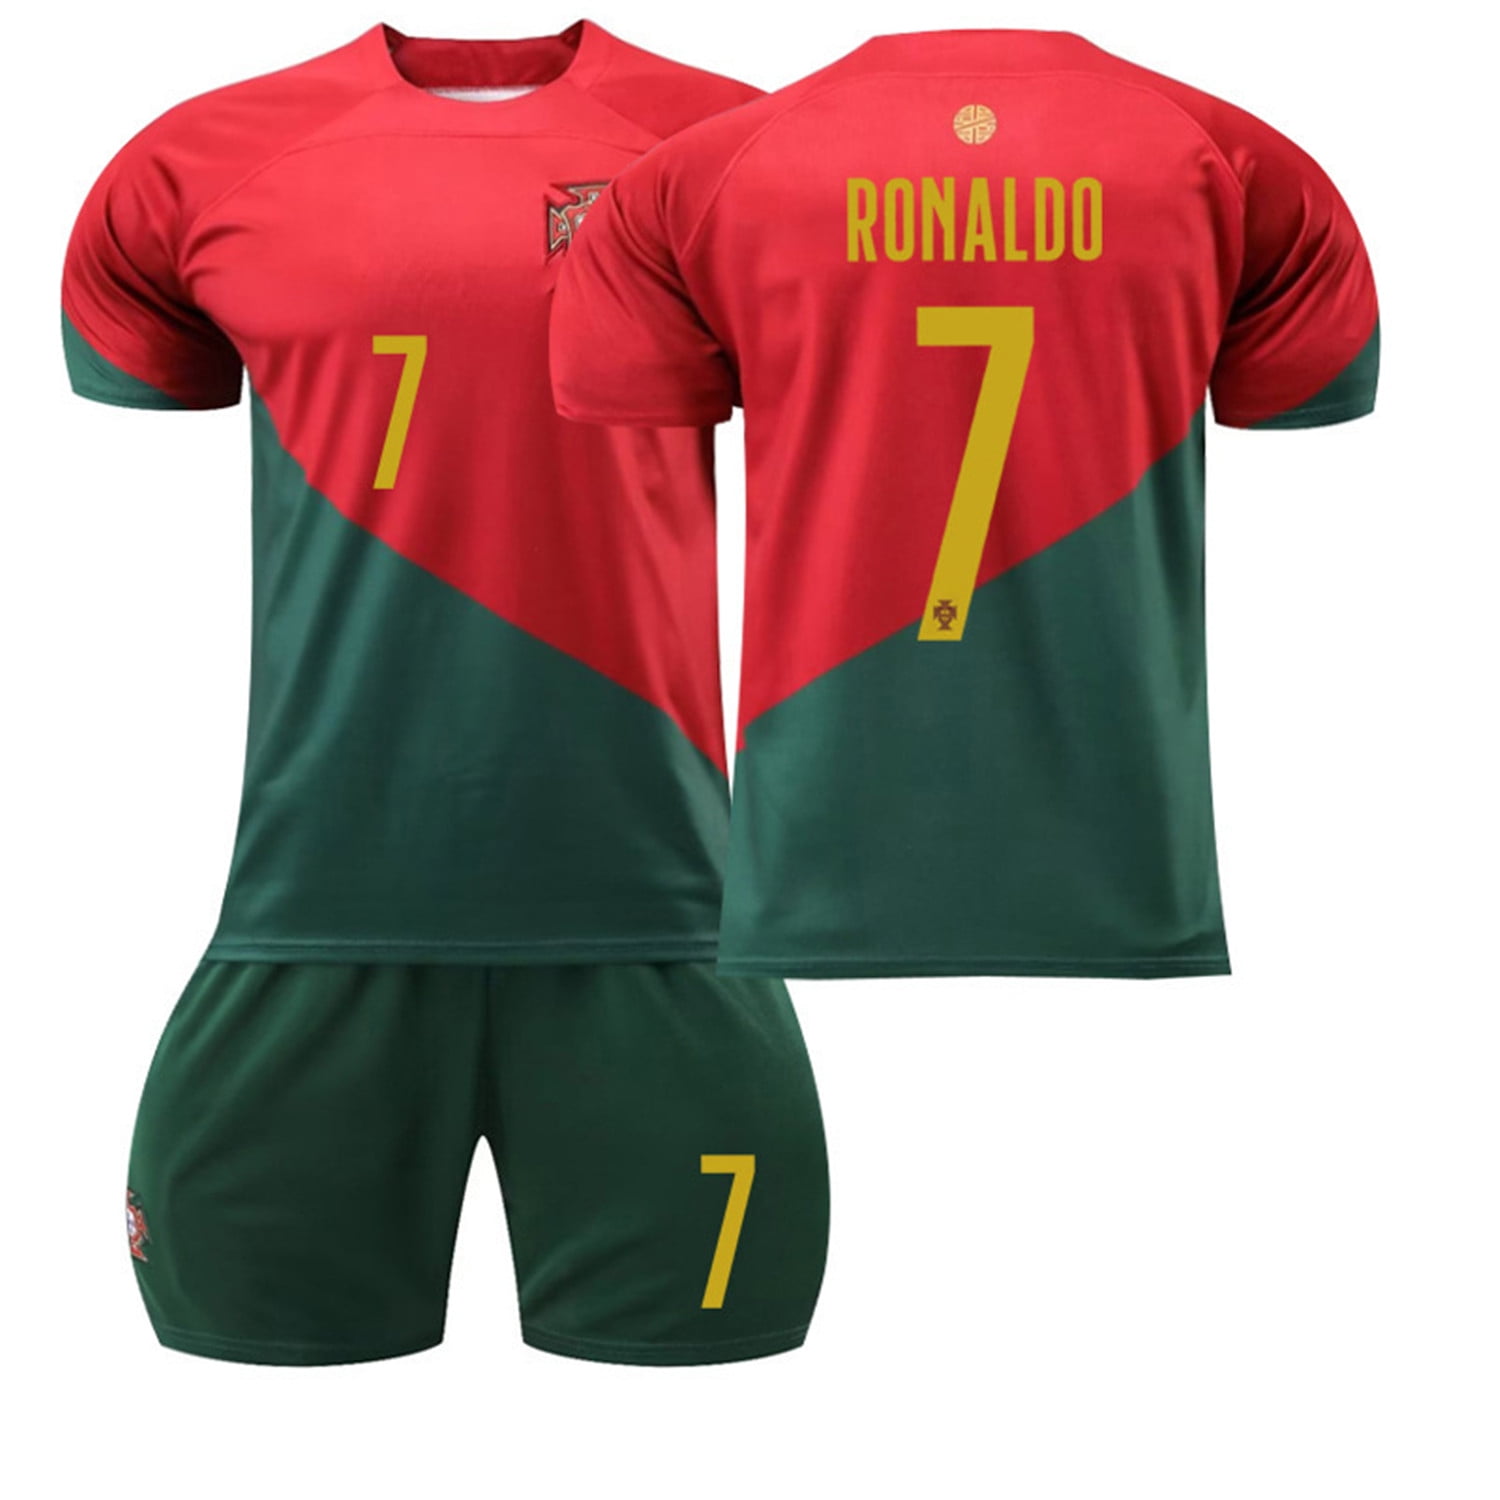 portugal world cup ronaldo jersey